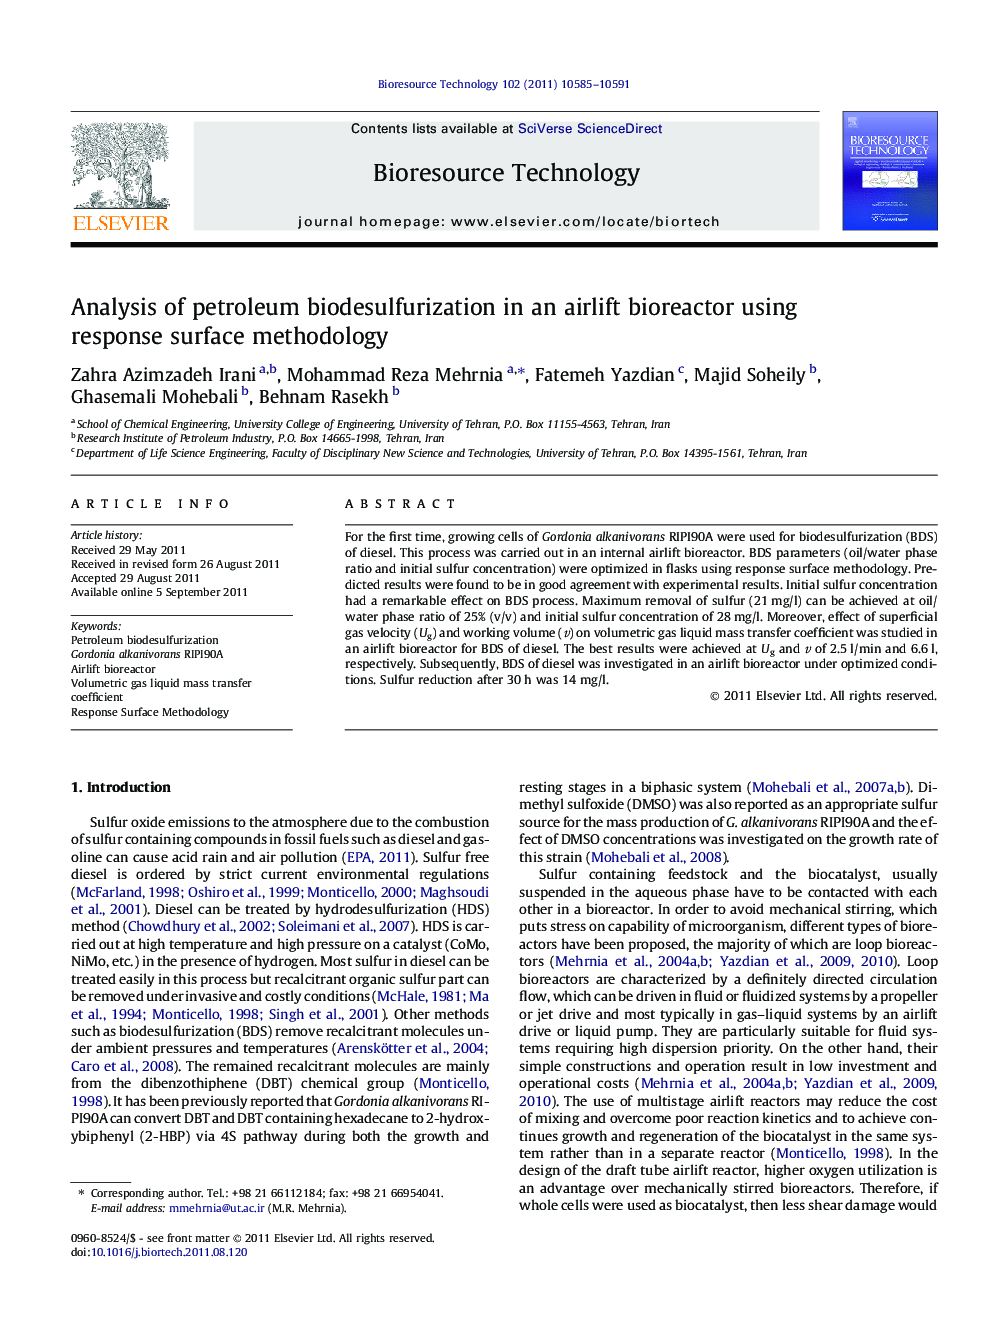 Analysis of petroleum biodesulfurization in an airlift bioreactor using response surface methodology